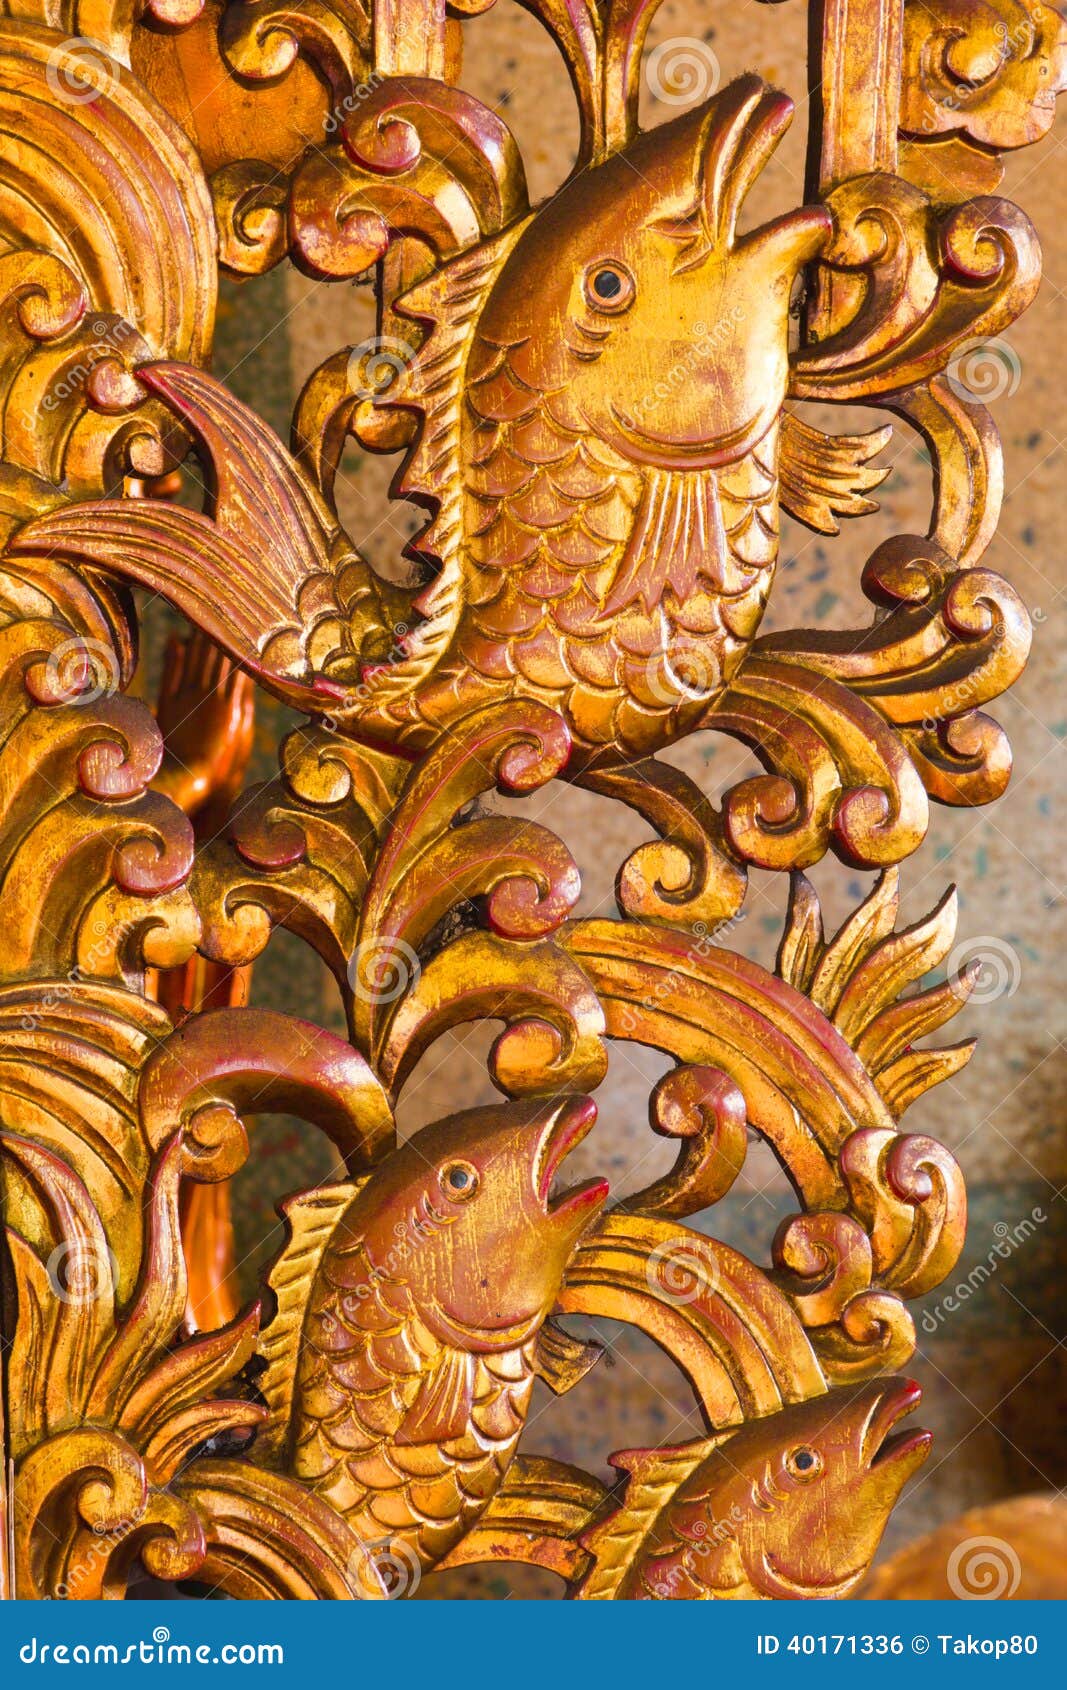 Artistic fish stock photo. Image of religion, light, oriental - 40171336